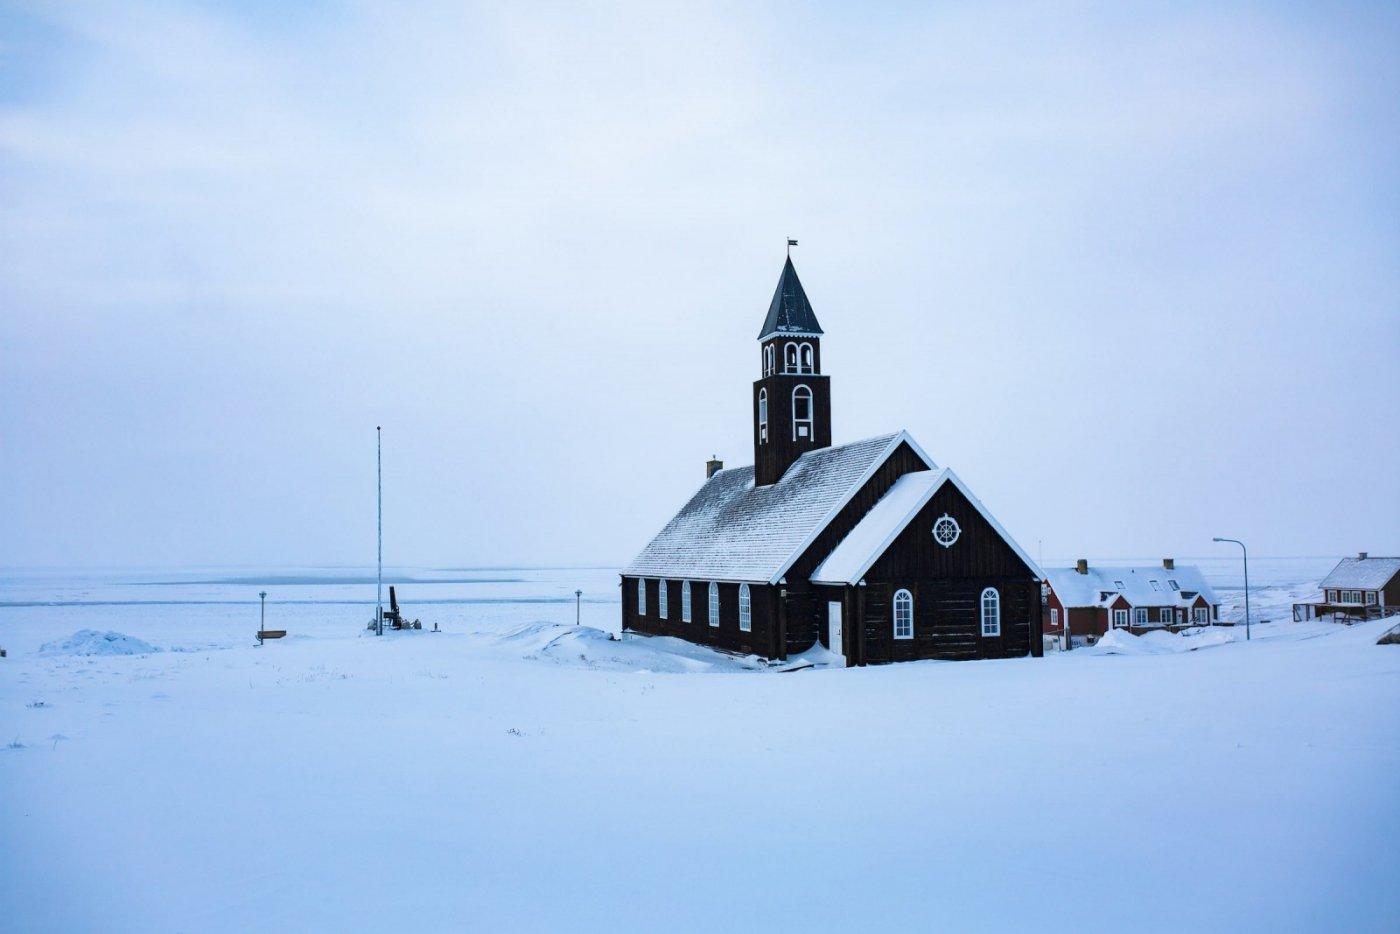 Zion church in ilulissat in winter. Photo Aningaaq. R Carlsen - Visit Greenland